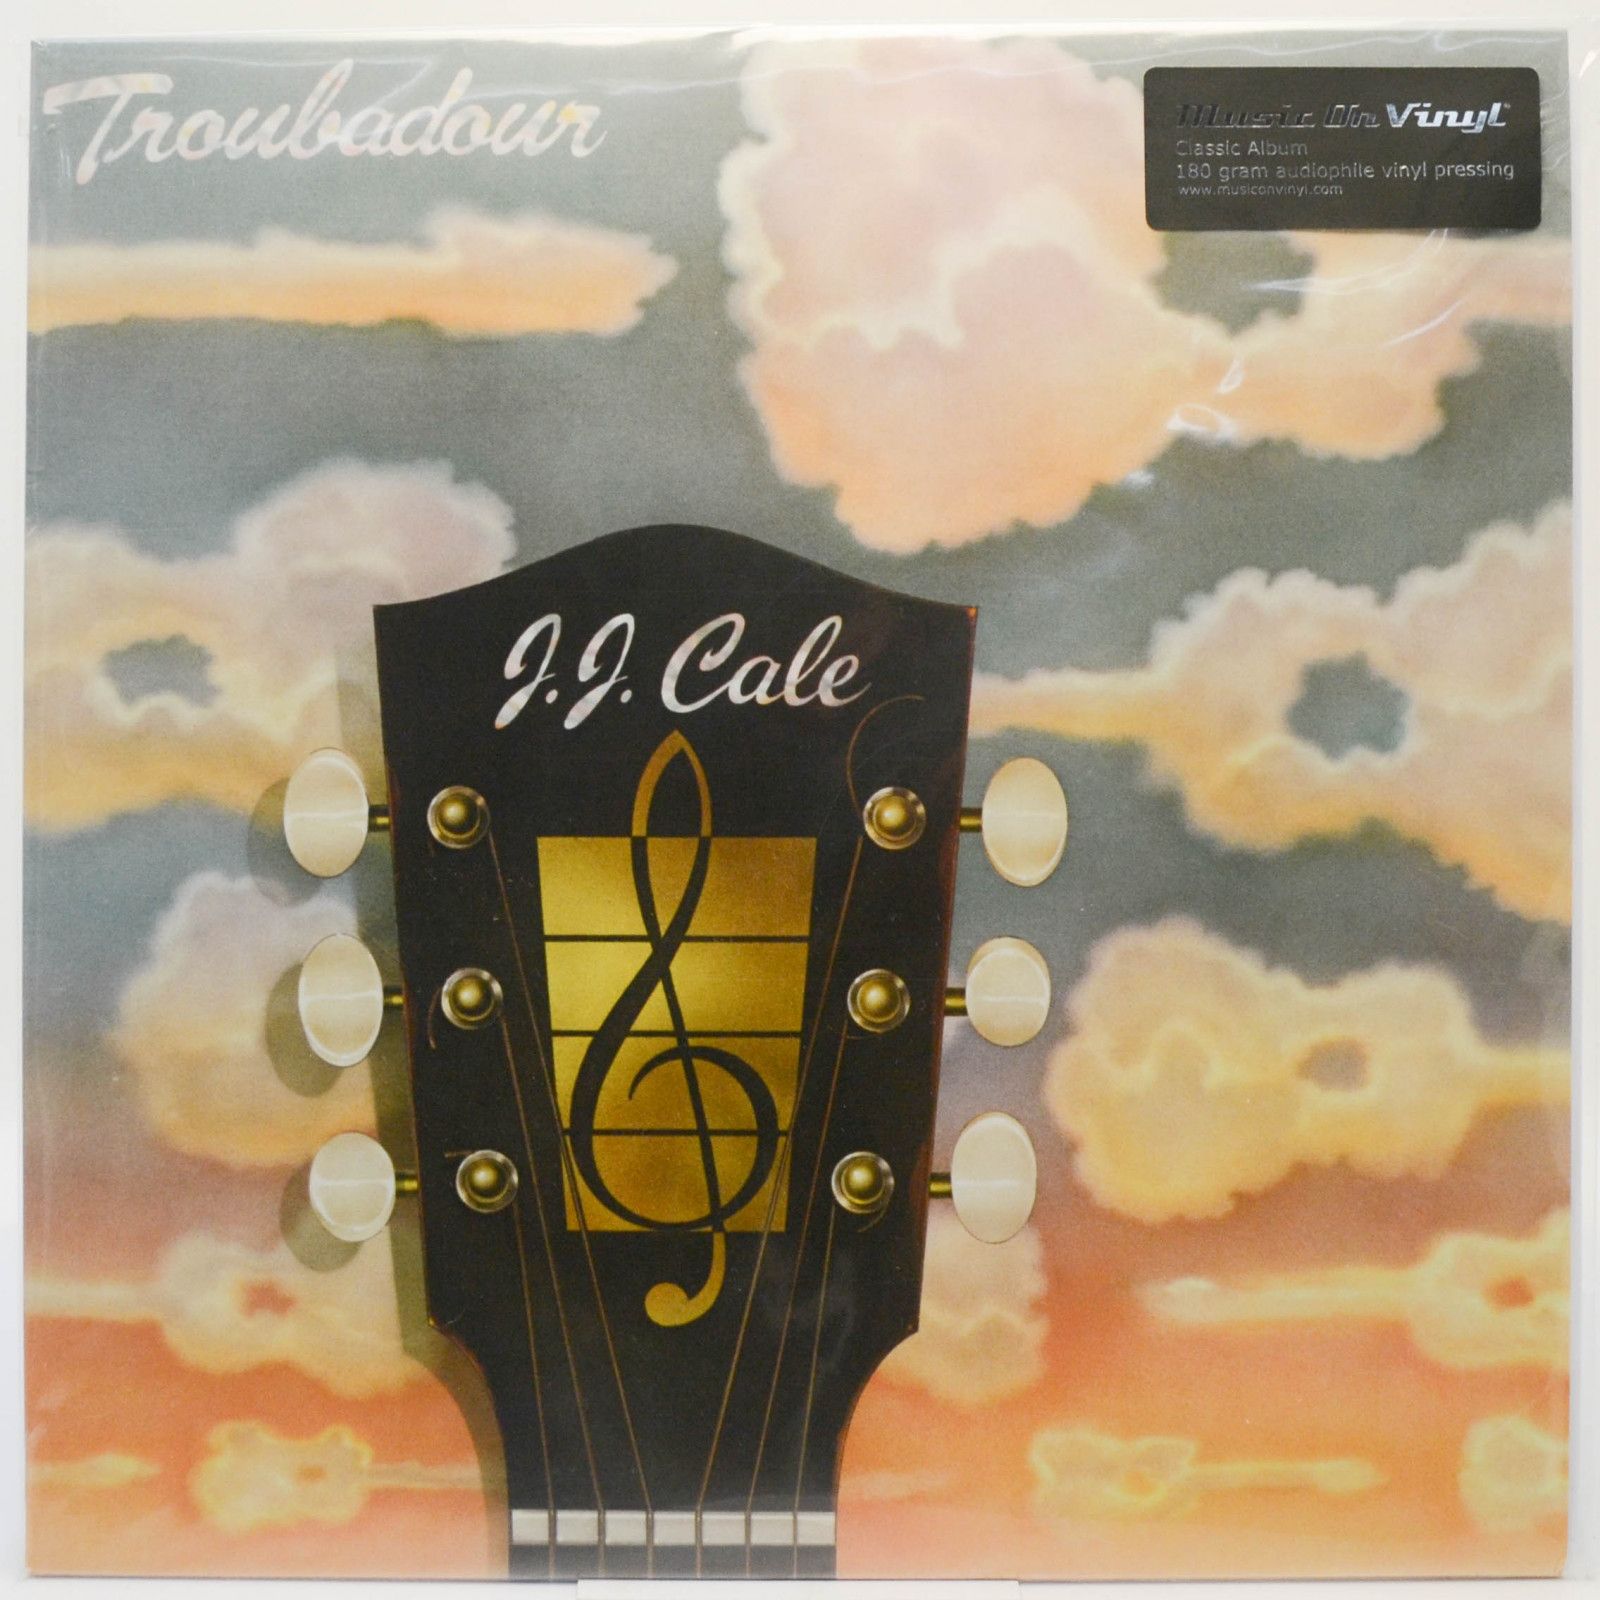 J.J. Cale — Troubadour, 1976